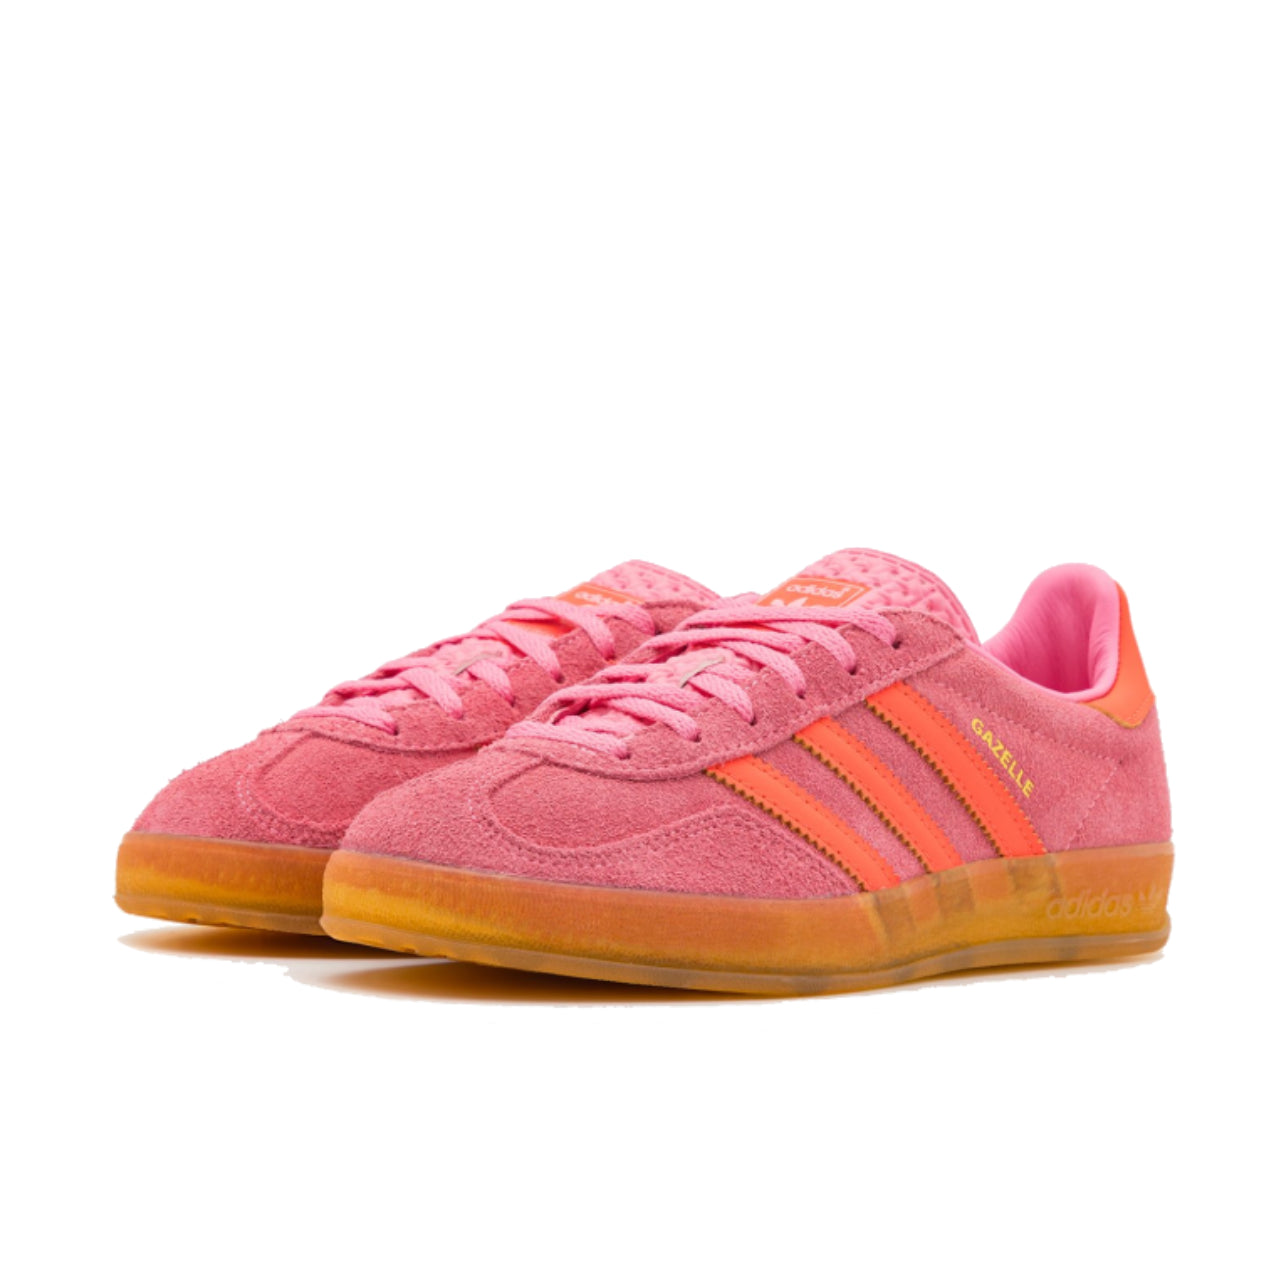 adidas Gazelle Indoor Beam Pink - IE1058 - Medial